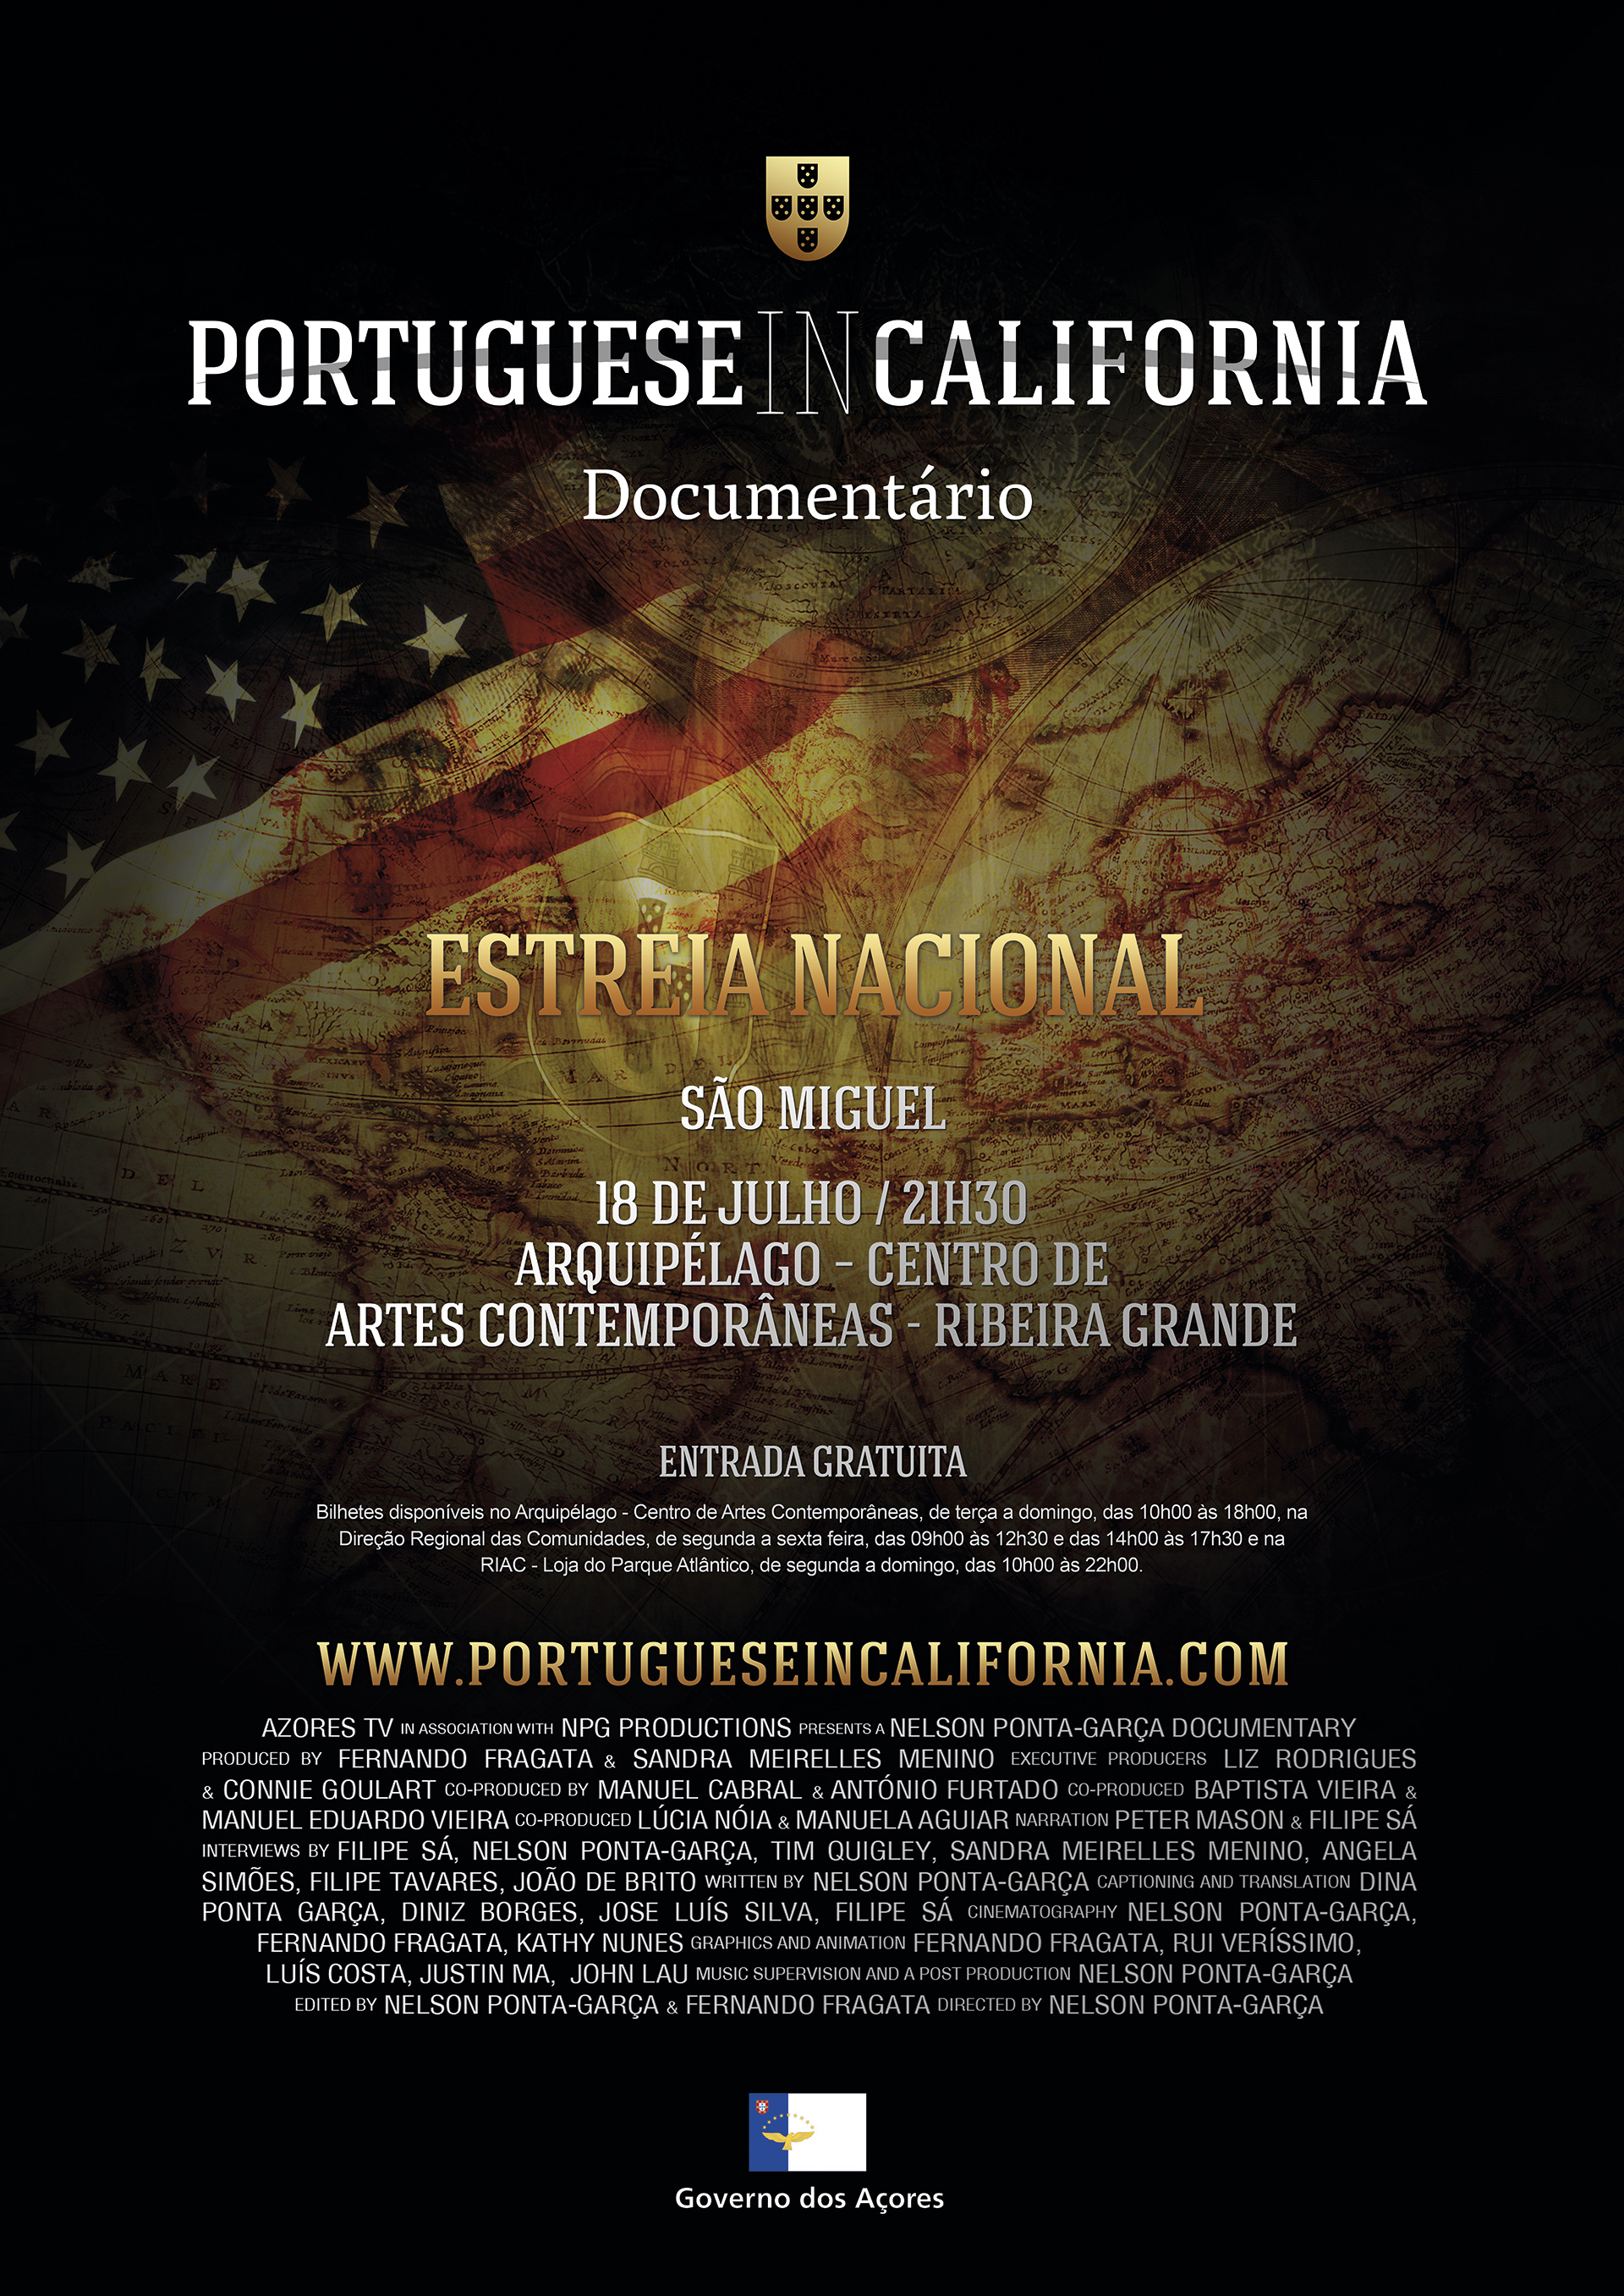 Portuguese in California